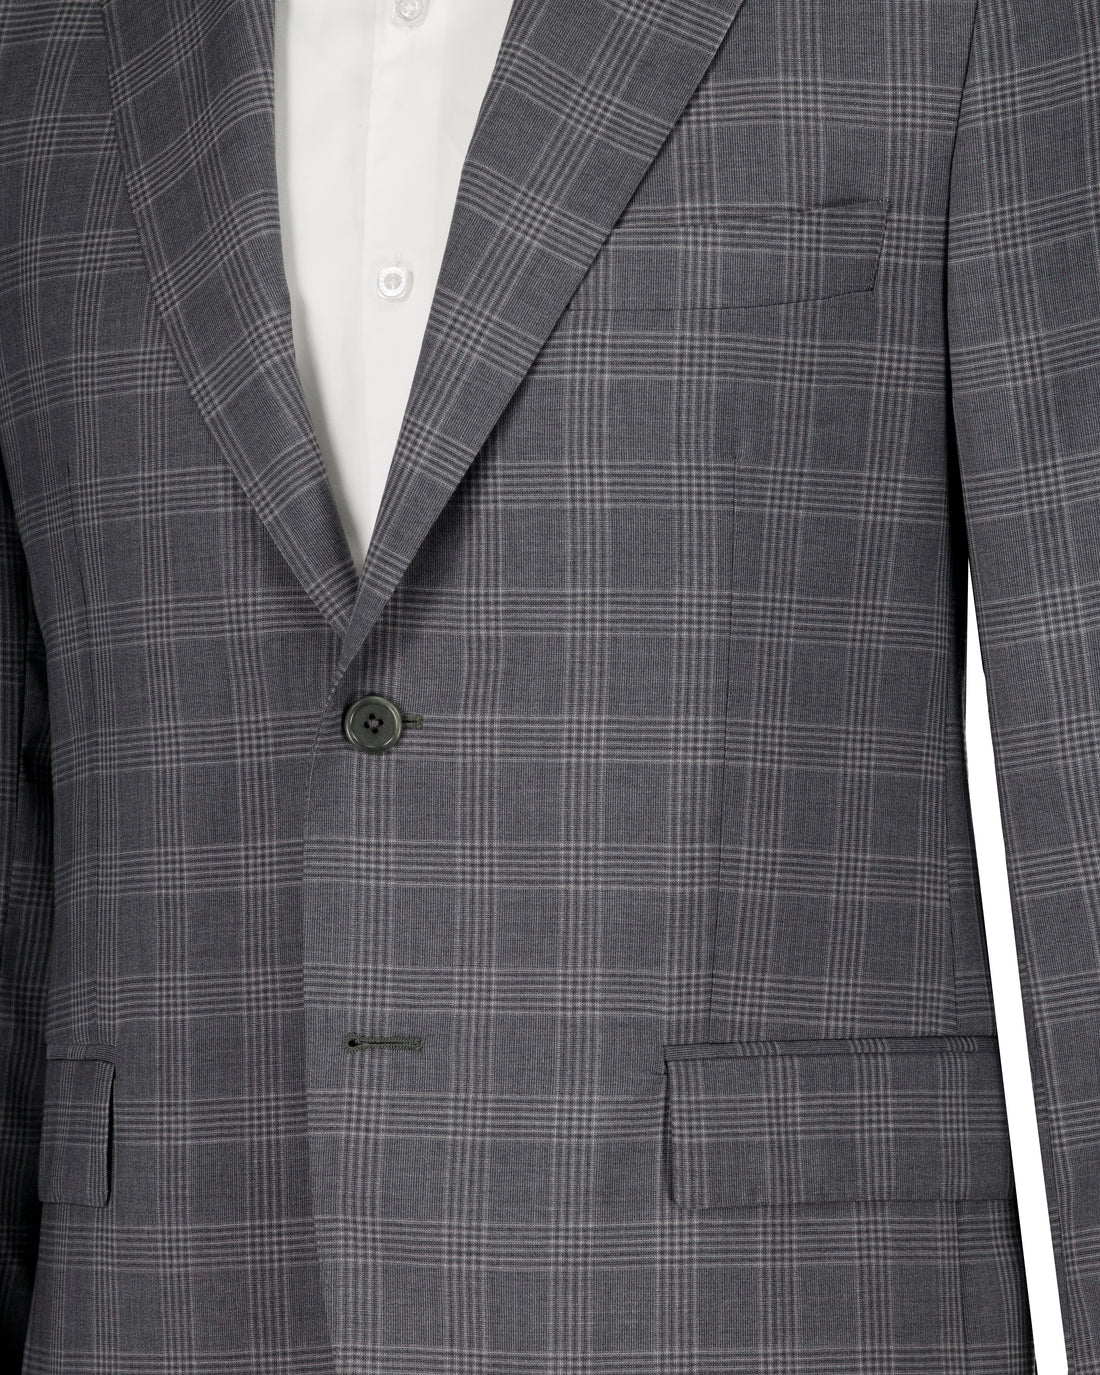 Ferruccio Zegna Cloth Suit - Grey - Made in Italy